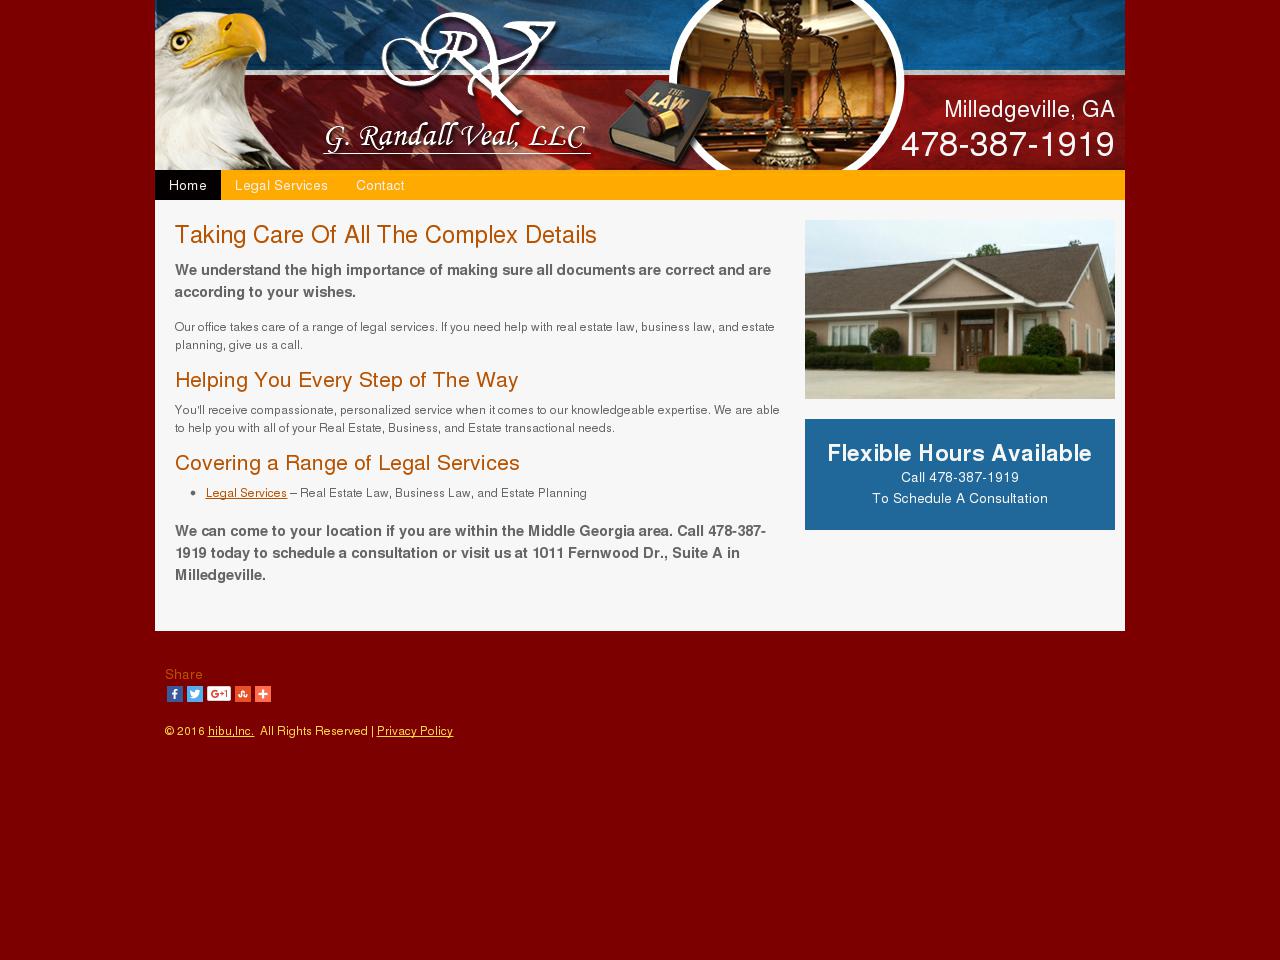 G Randall Veal LLC - Milledgeville GA Lawyers